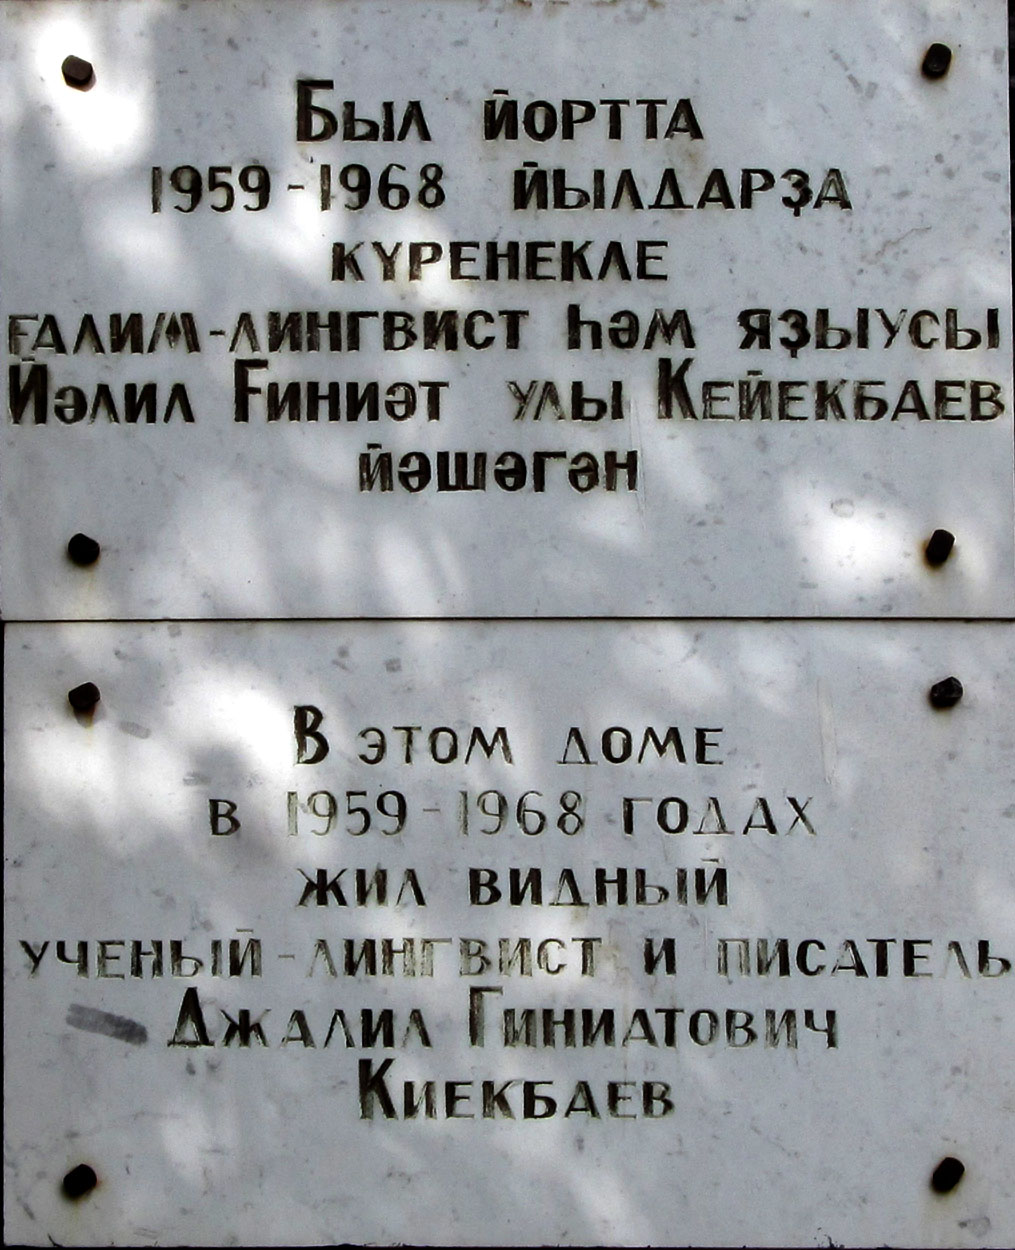 Ufa, Улица Ленина, 47. Ufa — Memorial plaques